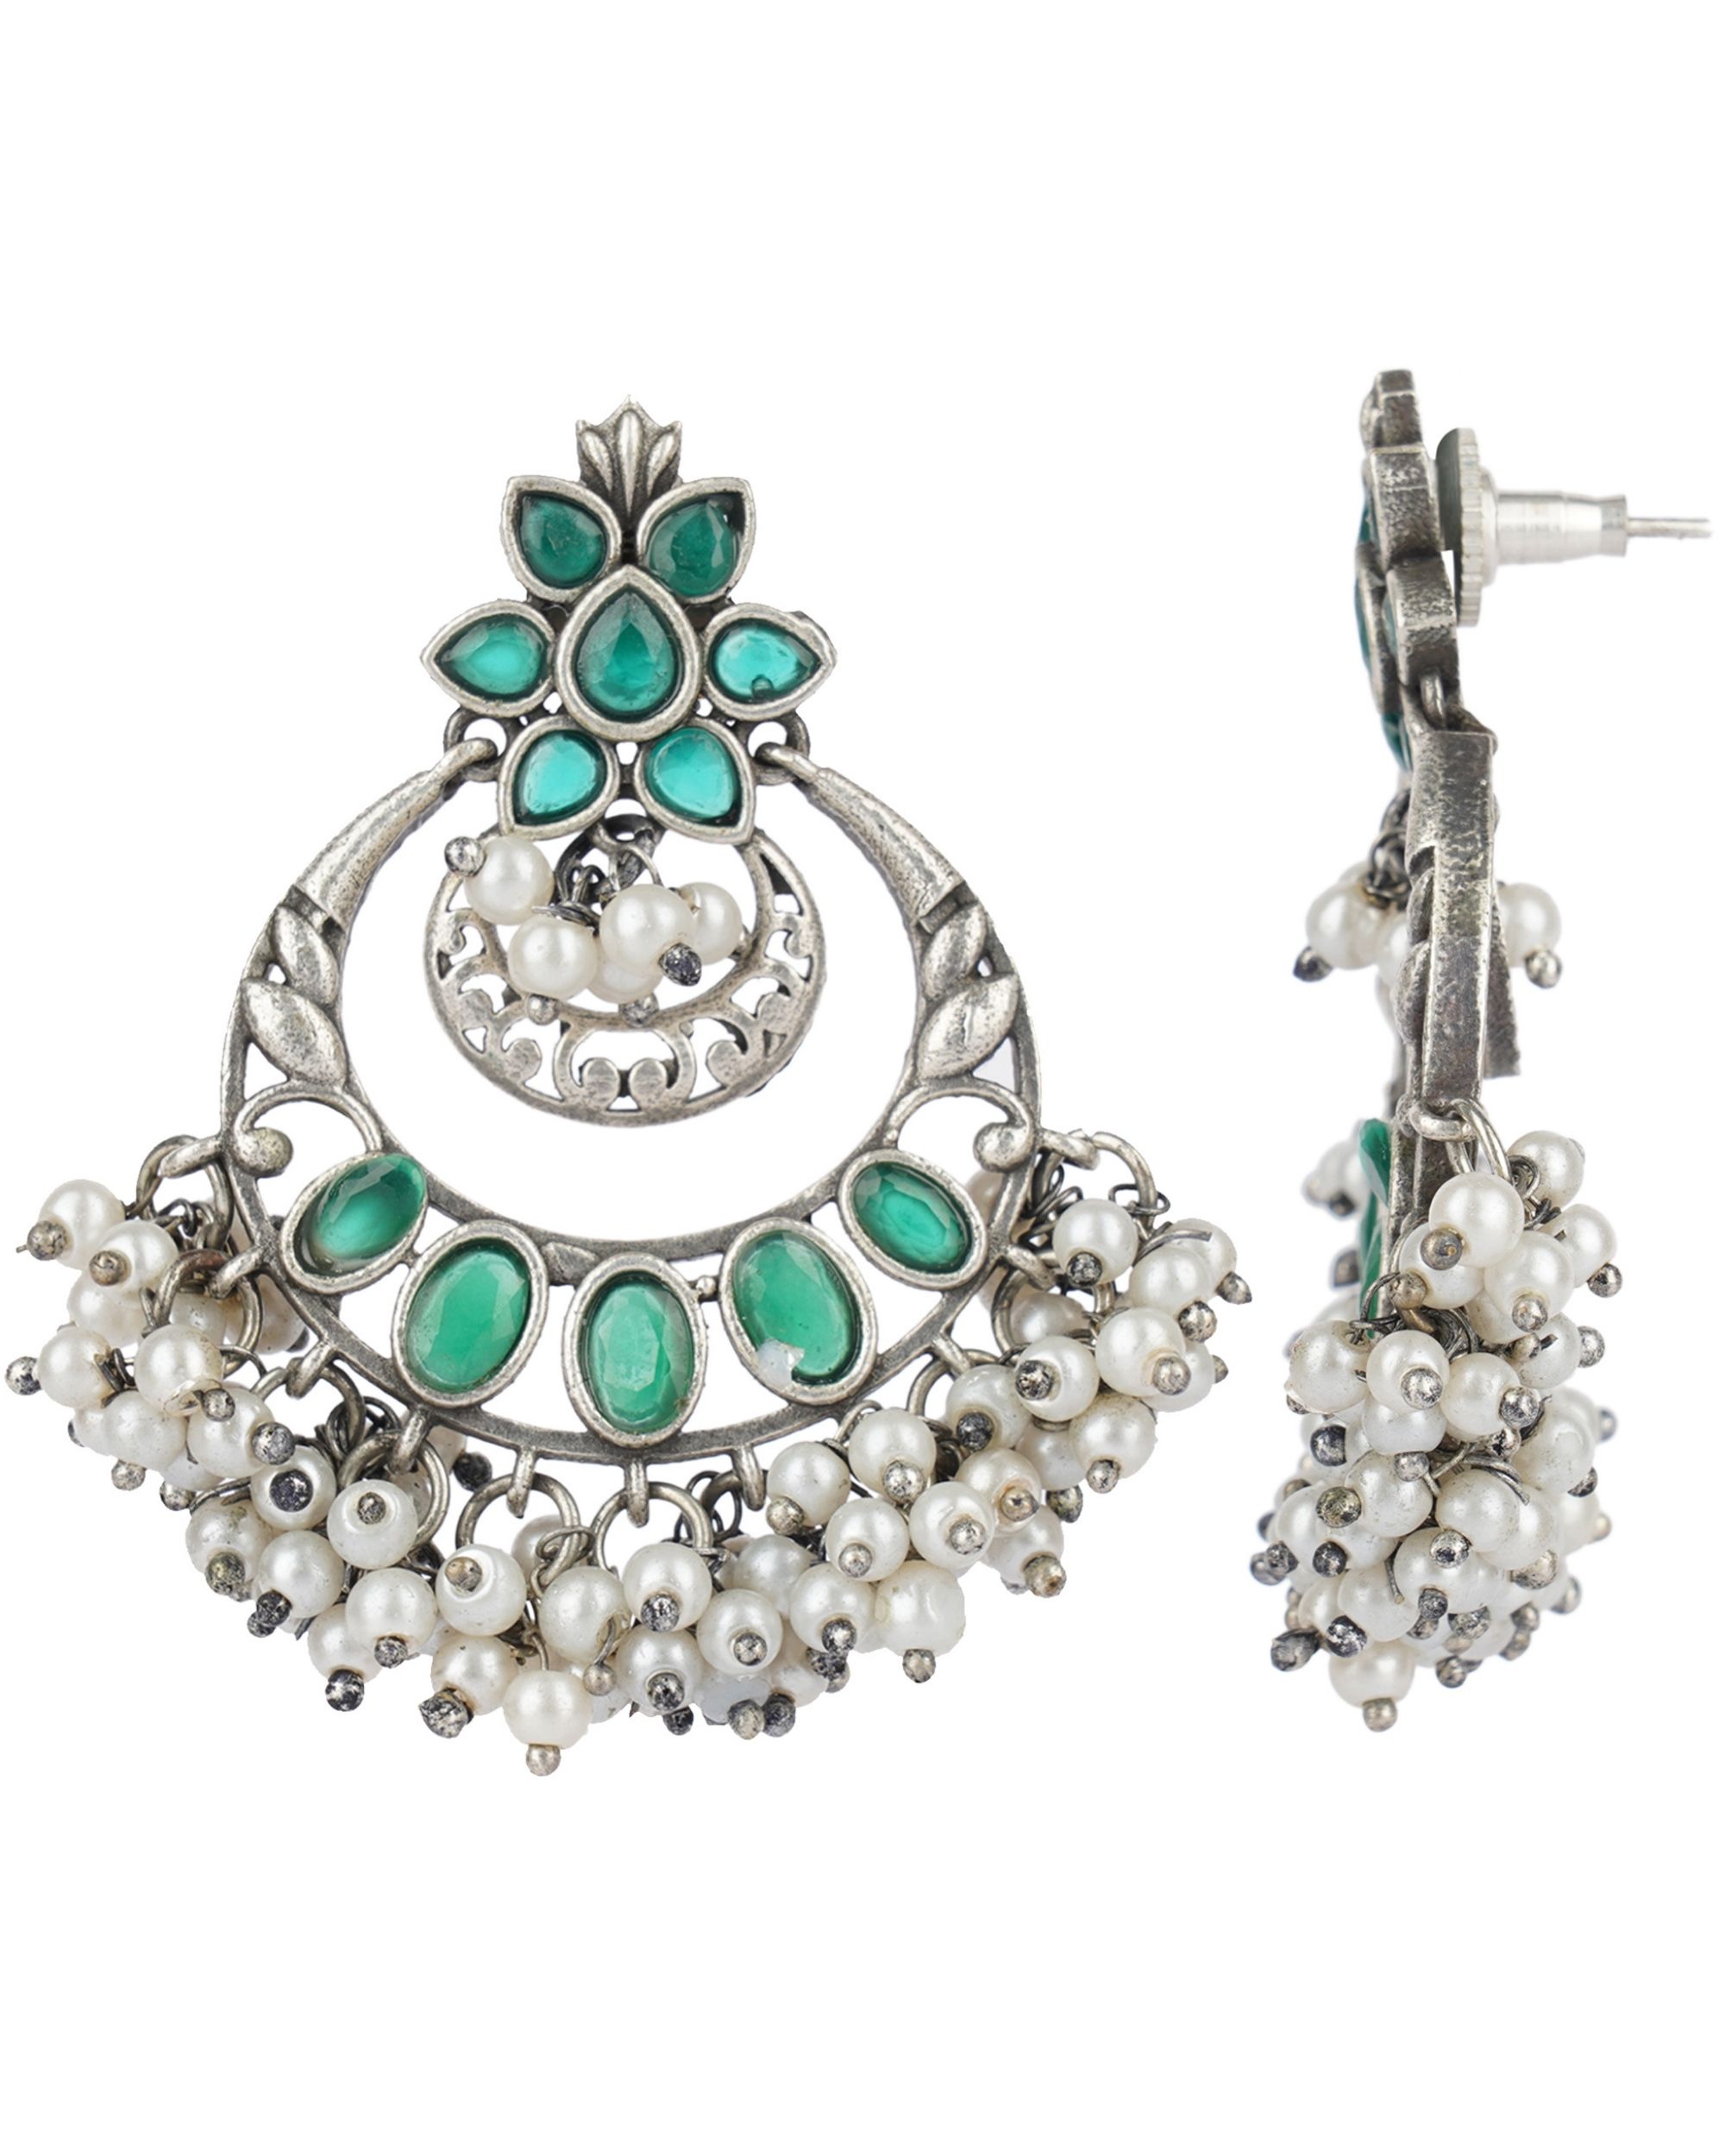 Shop Artisanal Antique Jewellery Online